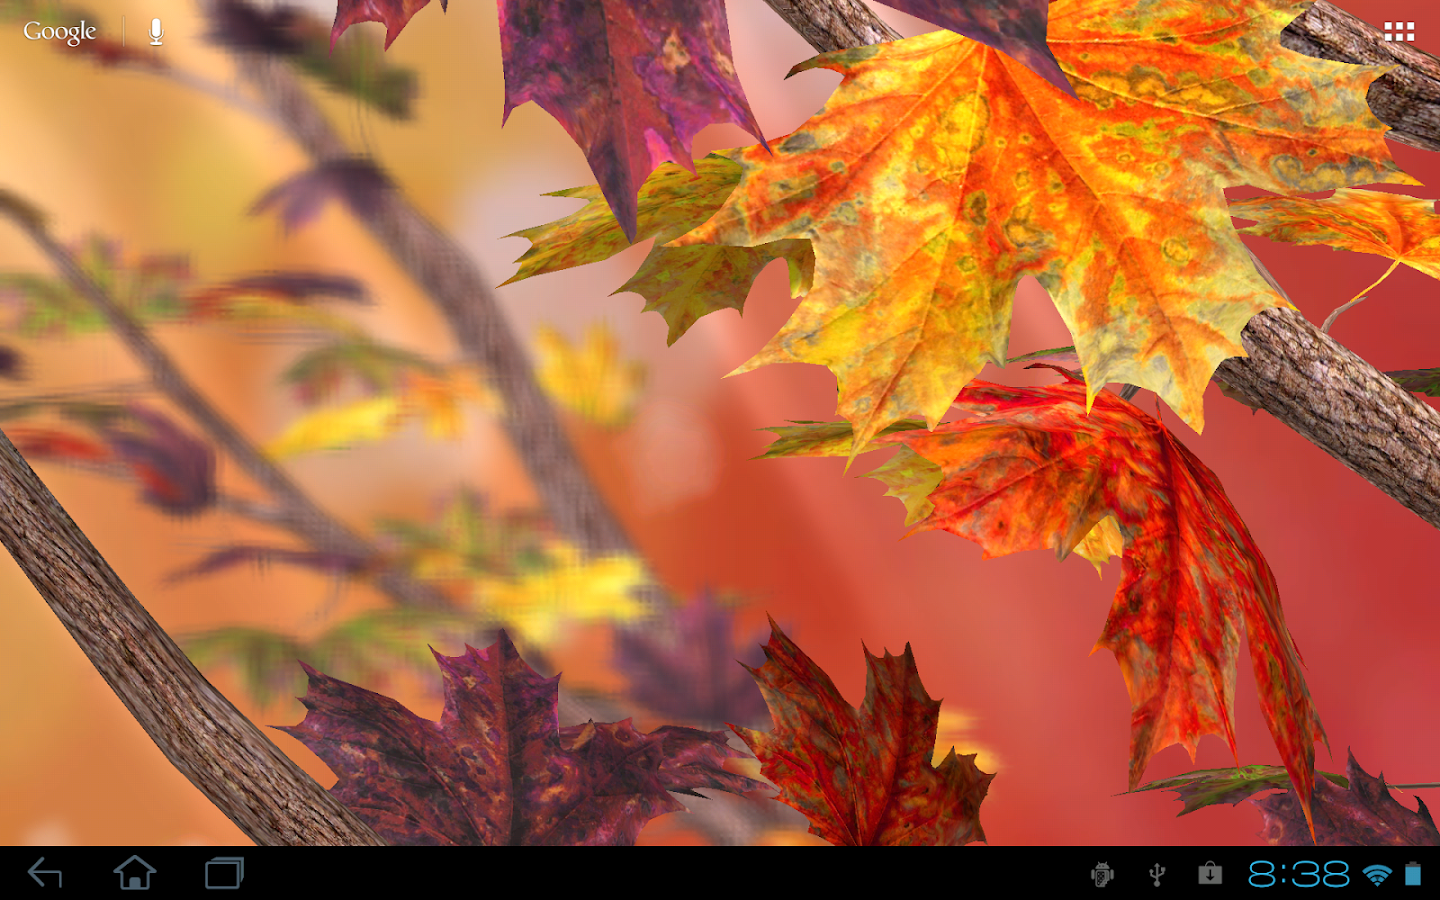 Autumn Tree Live Wallpaper - screenshot